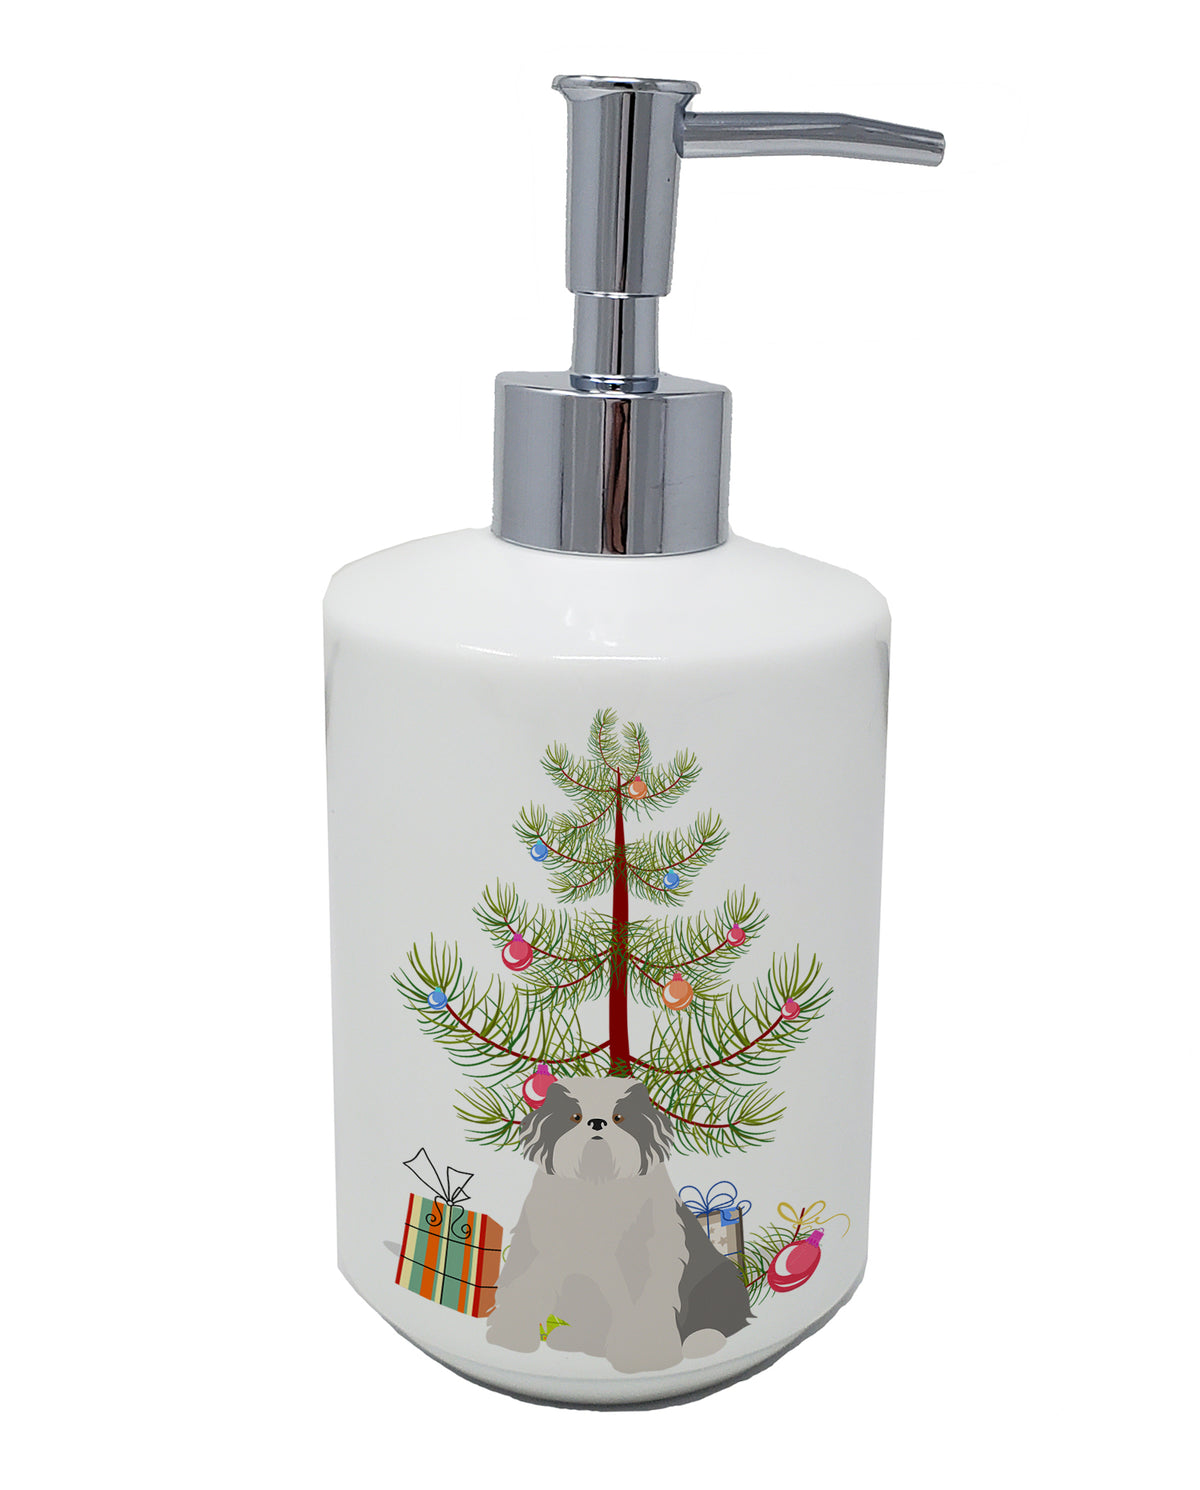 Buy this Odis Odessa Domestic Ideal Dog Christmas Tree Ceramic Soap Dispenser